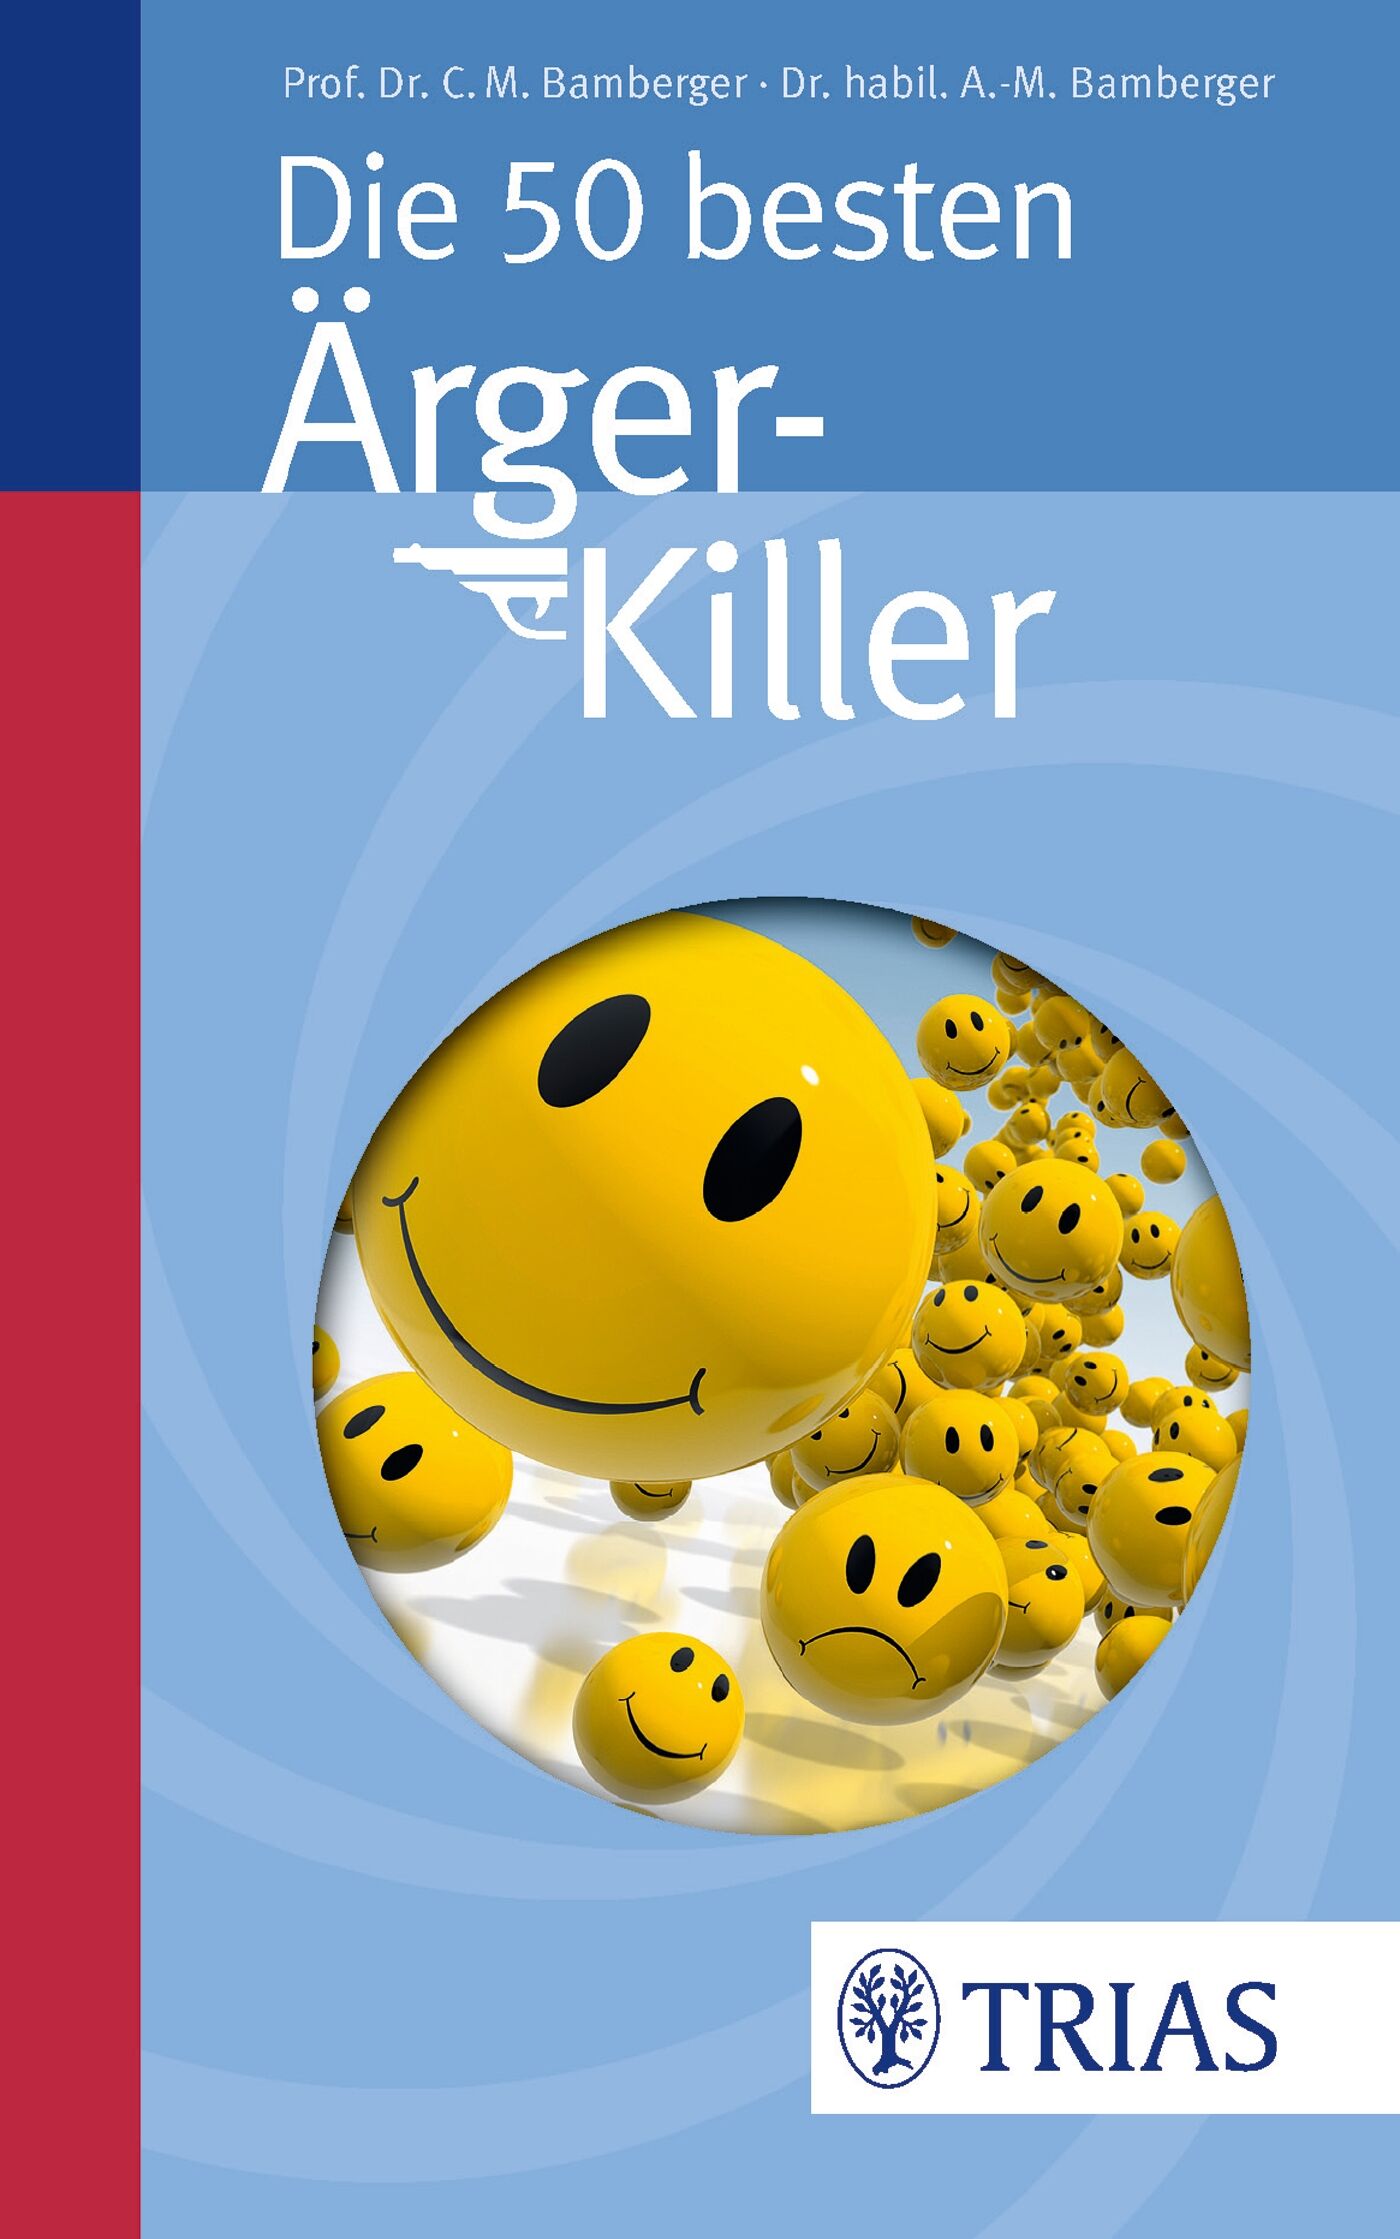 Die 50 besten Ärger-Killer, 9783830468929